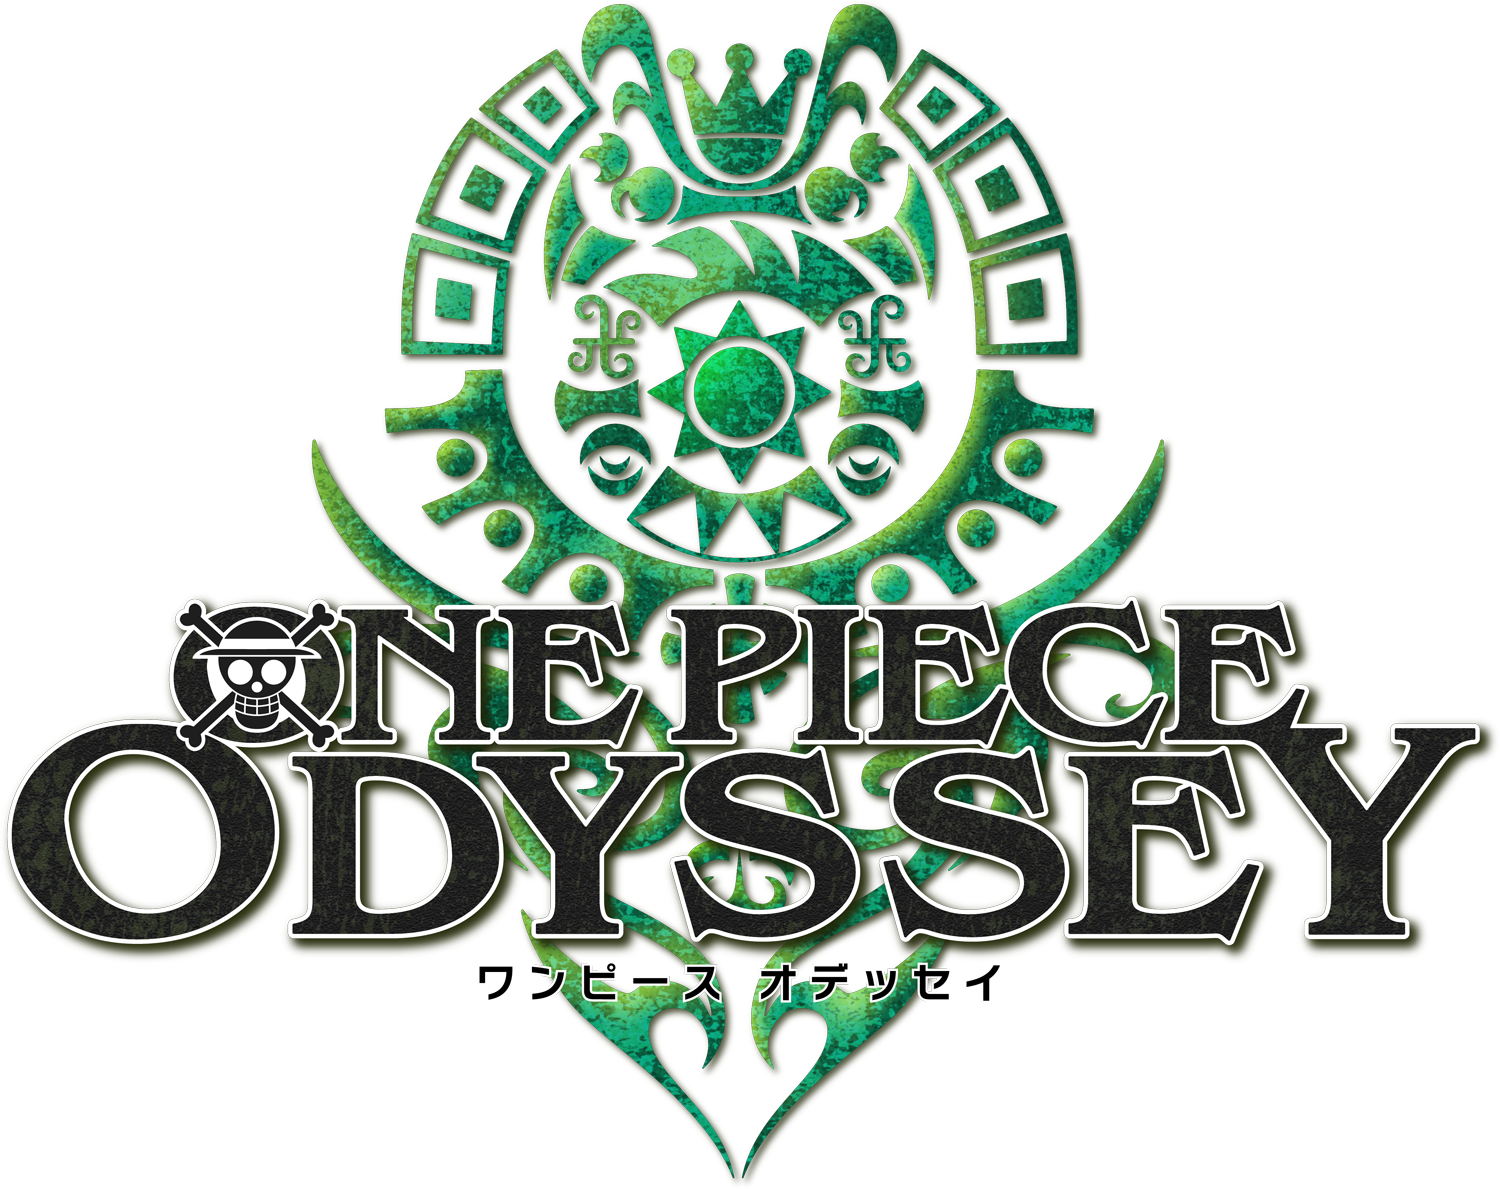 One Piece 25周年記念作品 One Piece Odyssey 22年発売決定 ファーストトレーラー公開のお知らせ 株式会社バンダイナムコエンターテインメントのプレスリリース